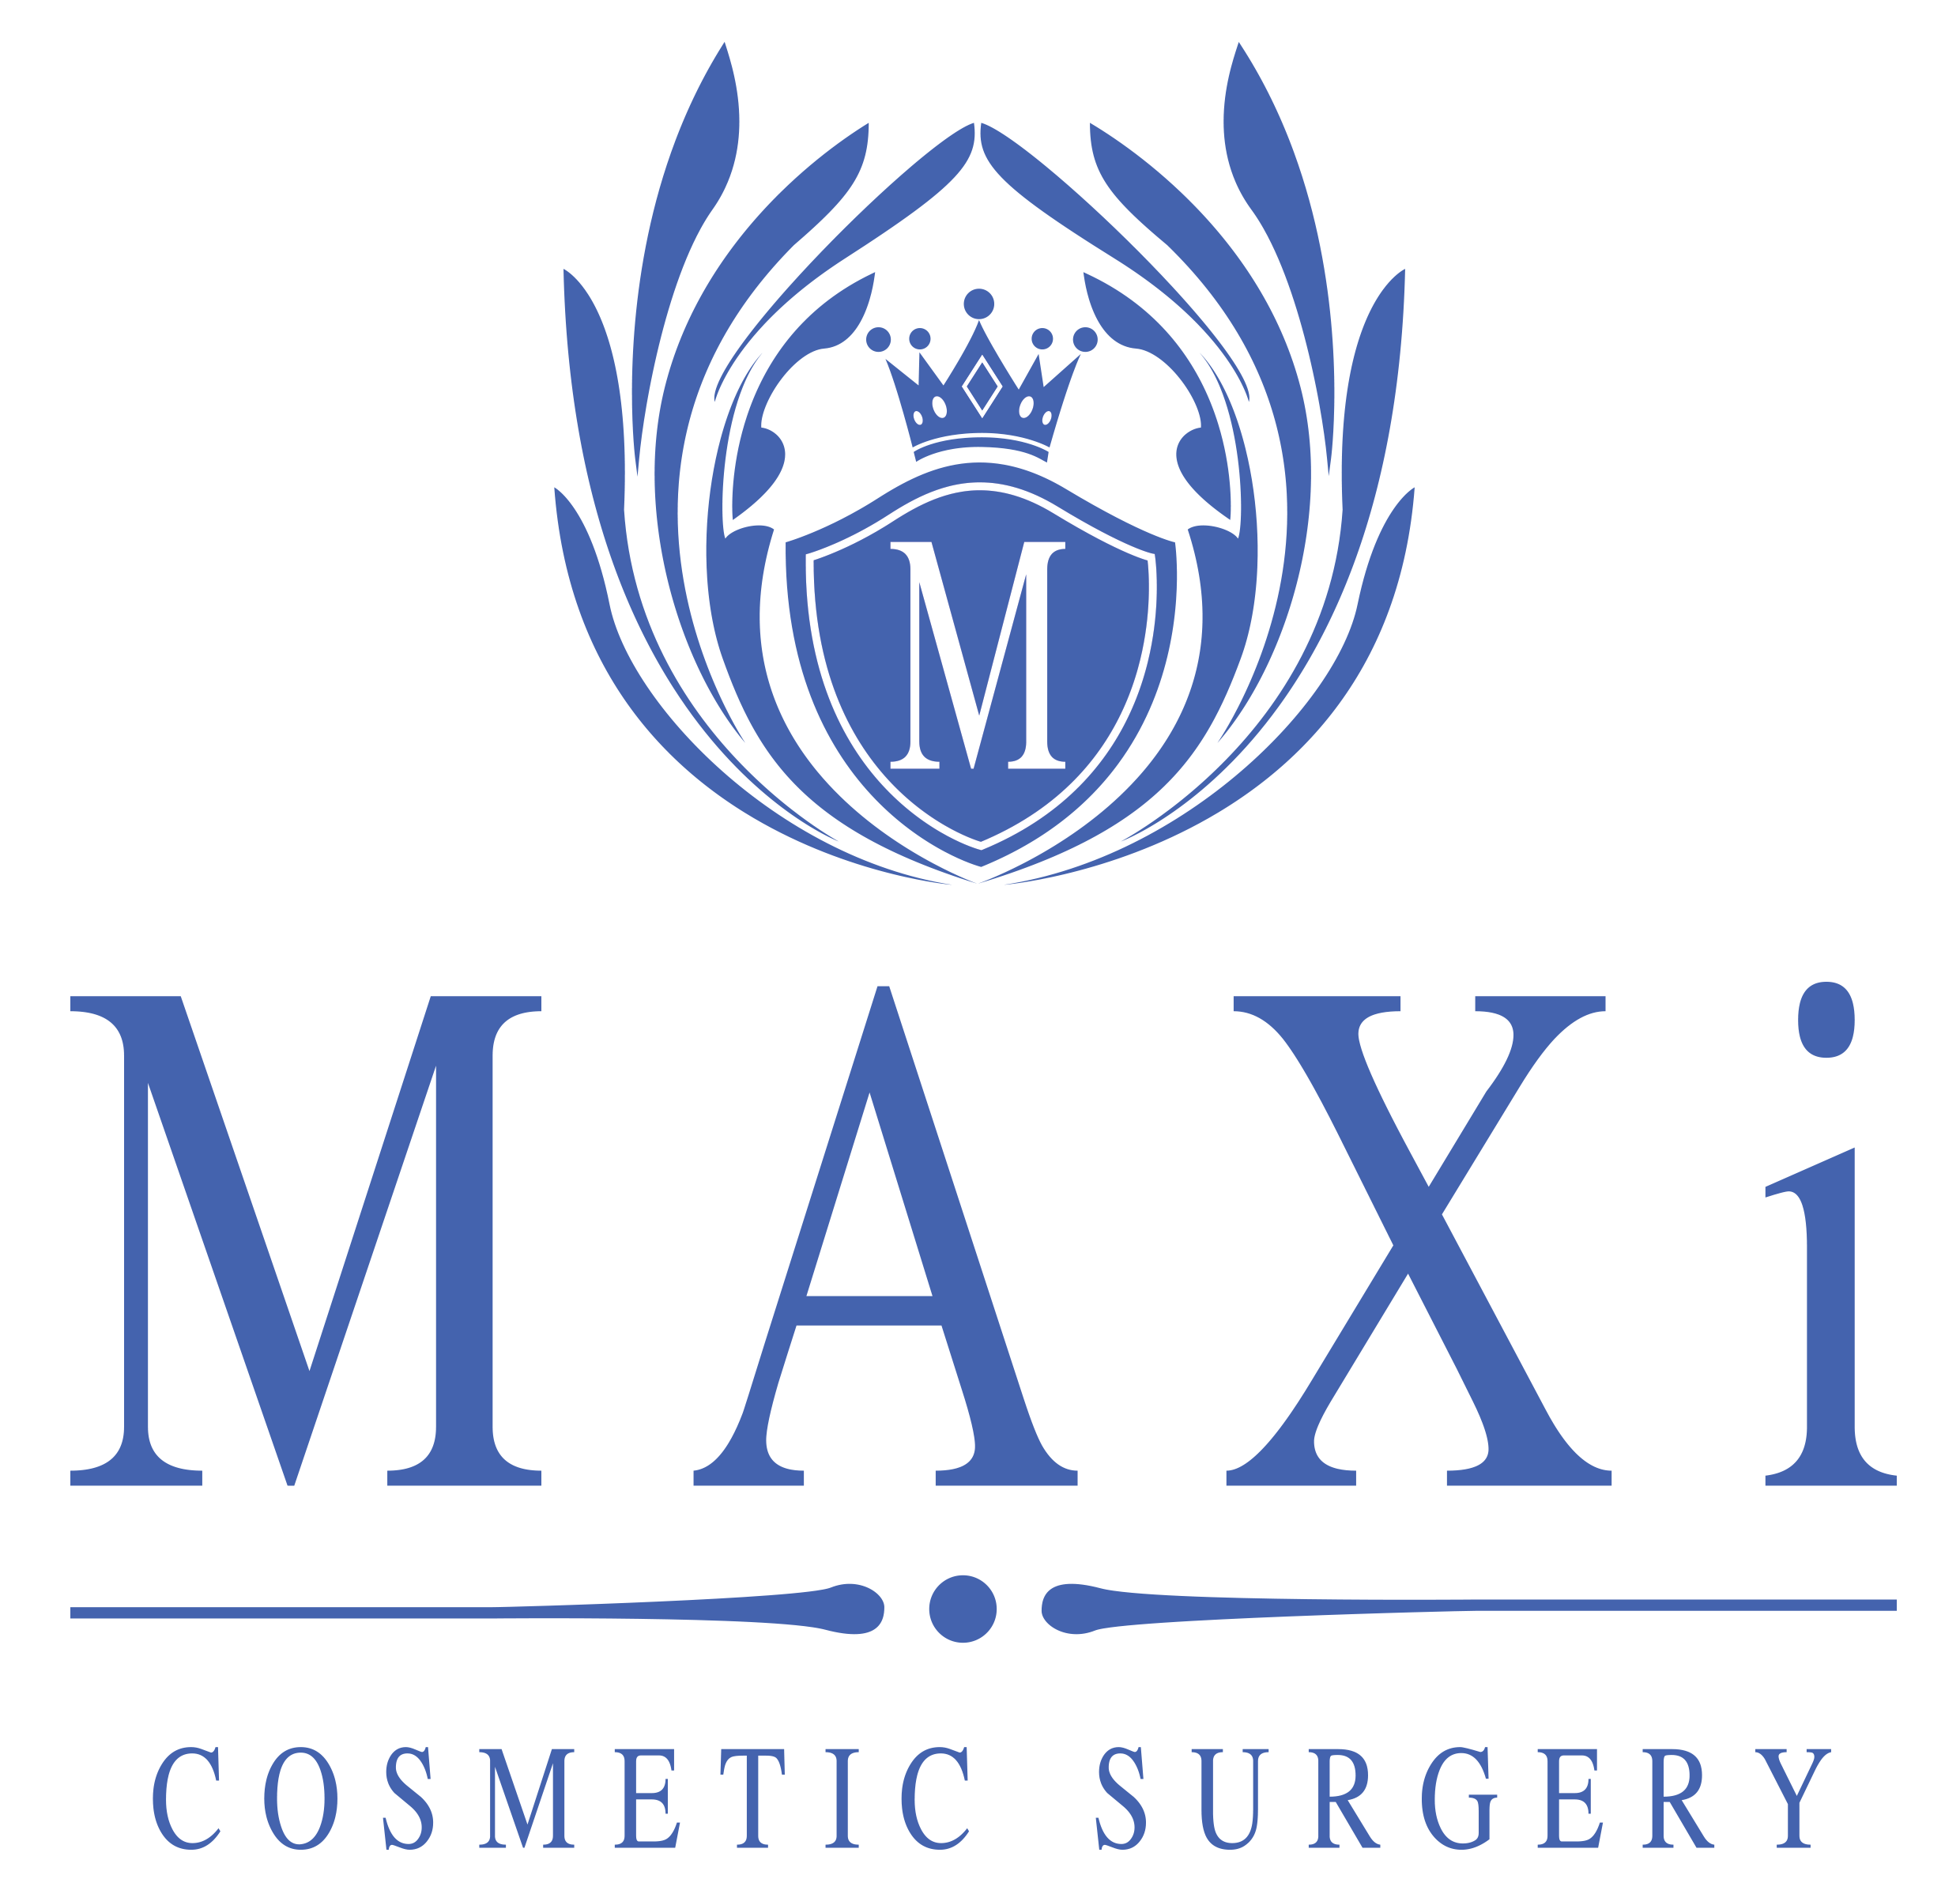 MAXi Cosmetic Surgery